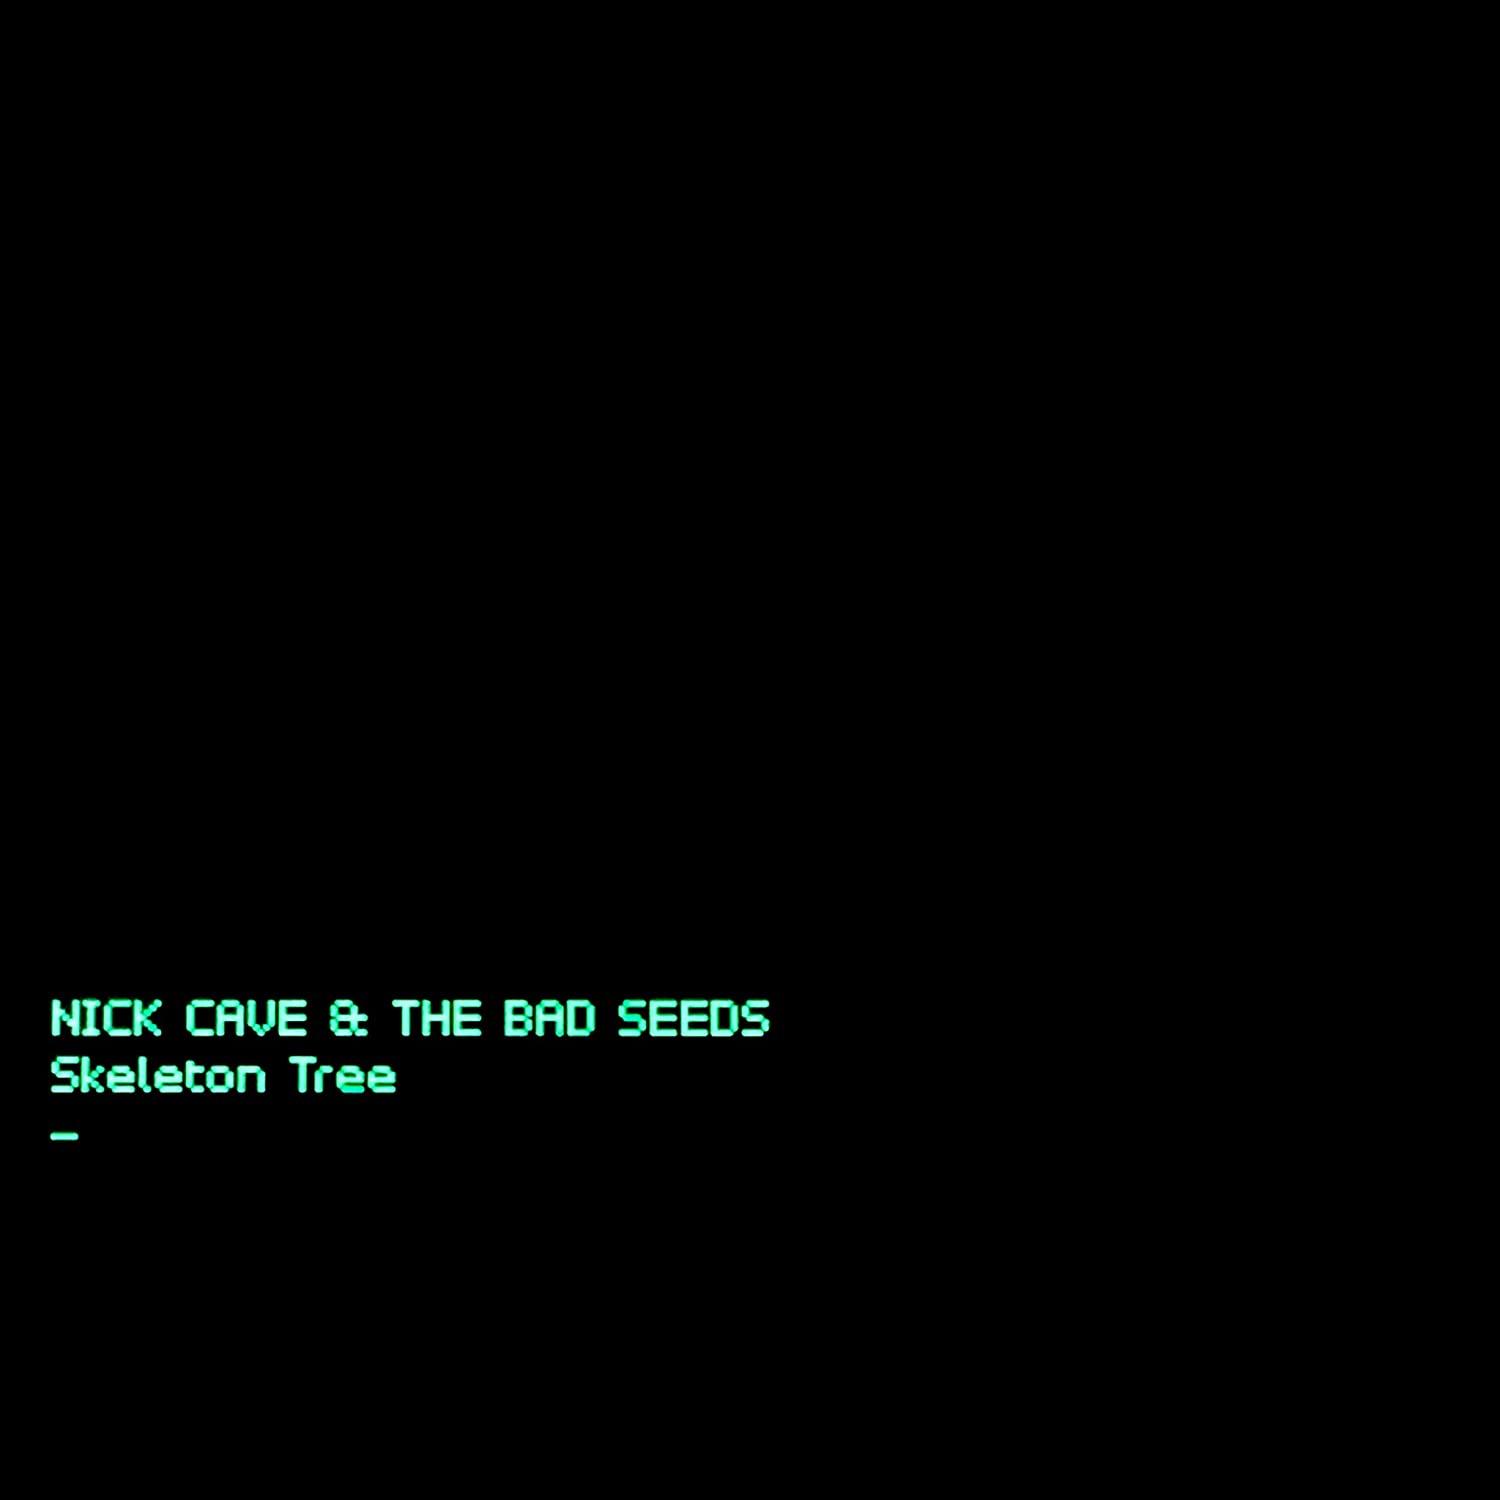 Nick Cave & The Bad Seeds - Skeleton Tree (2016) LP